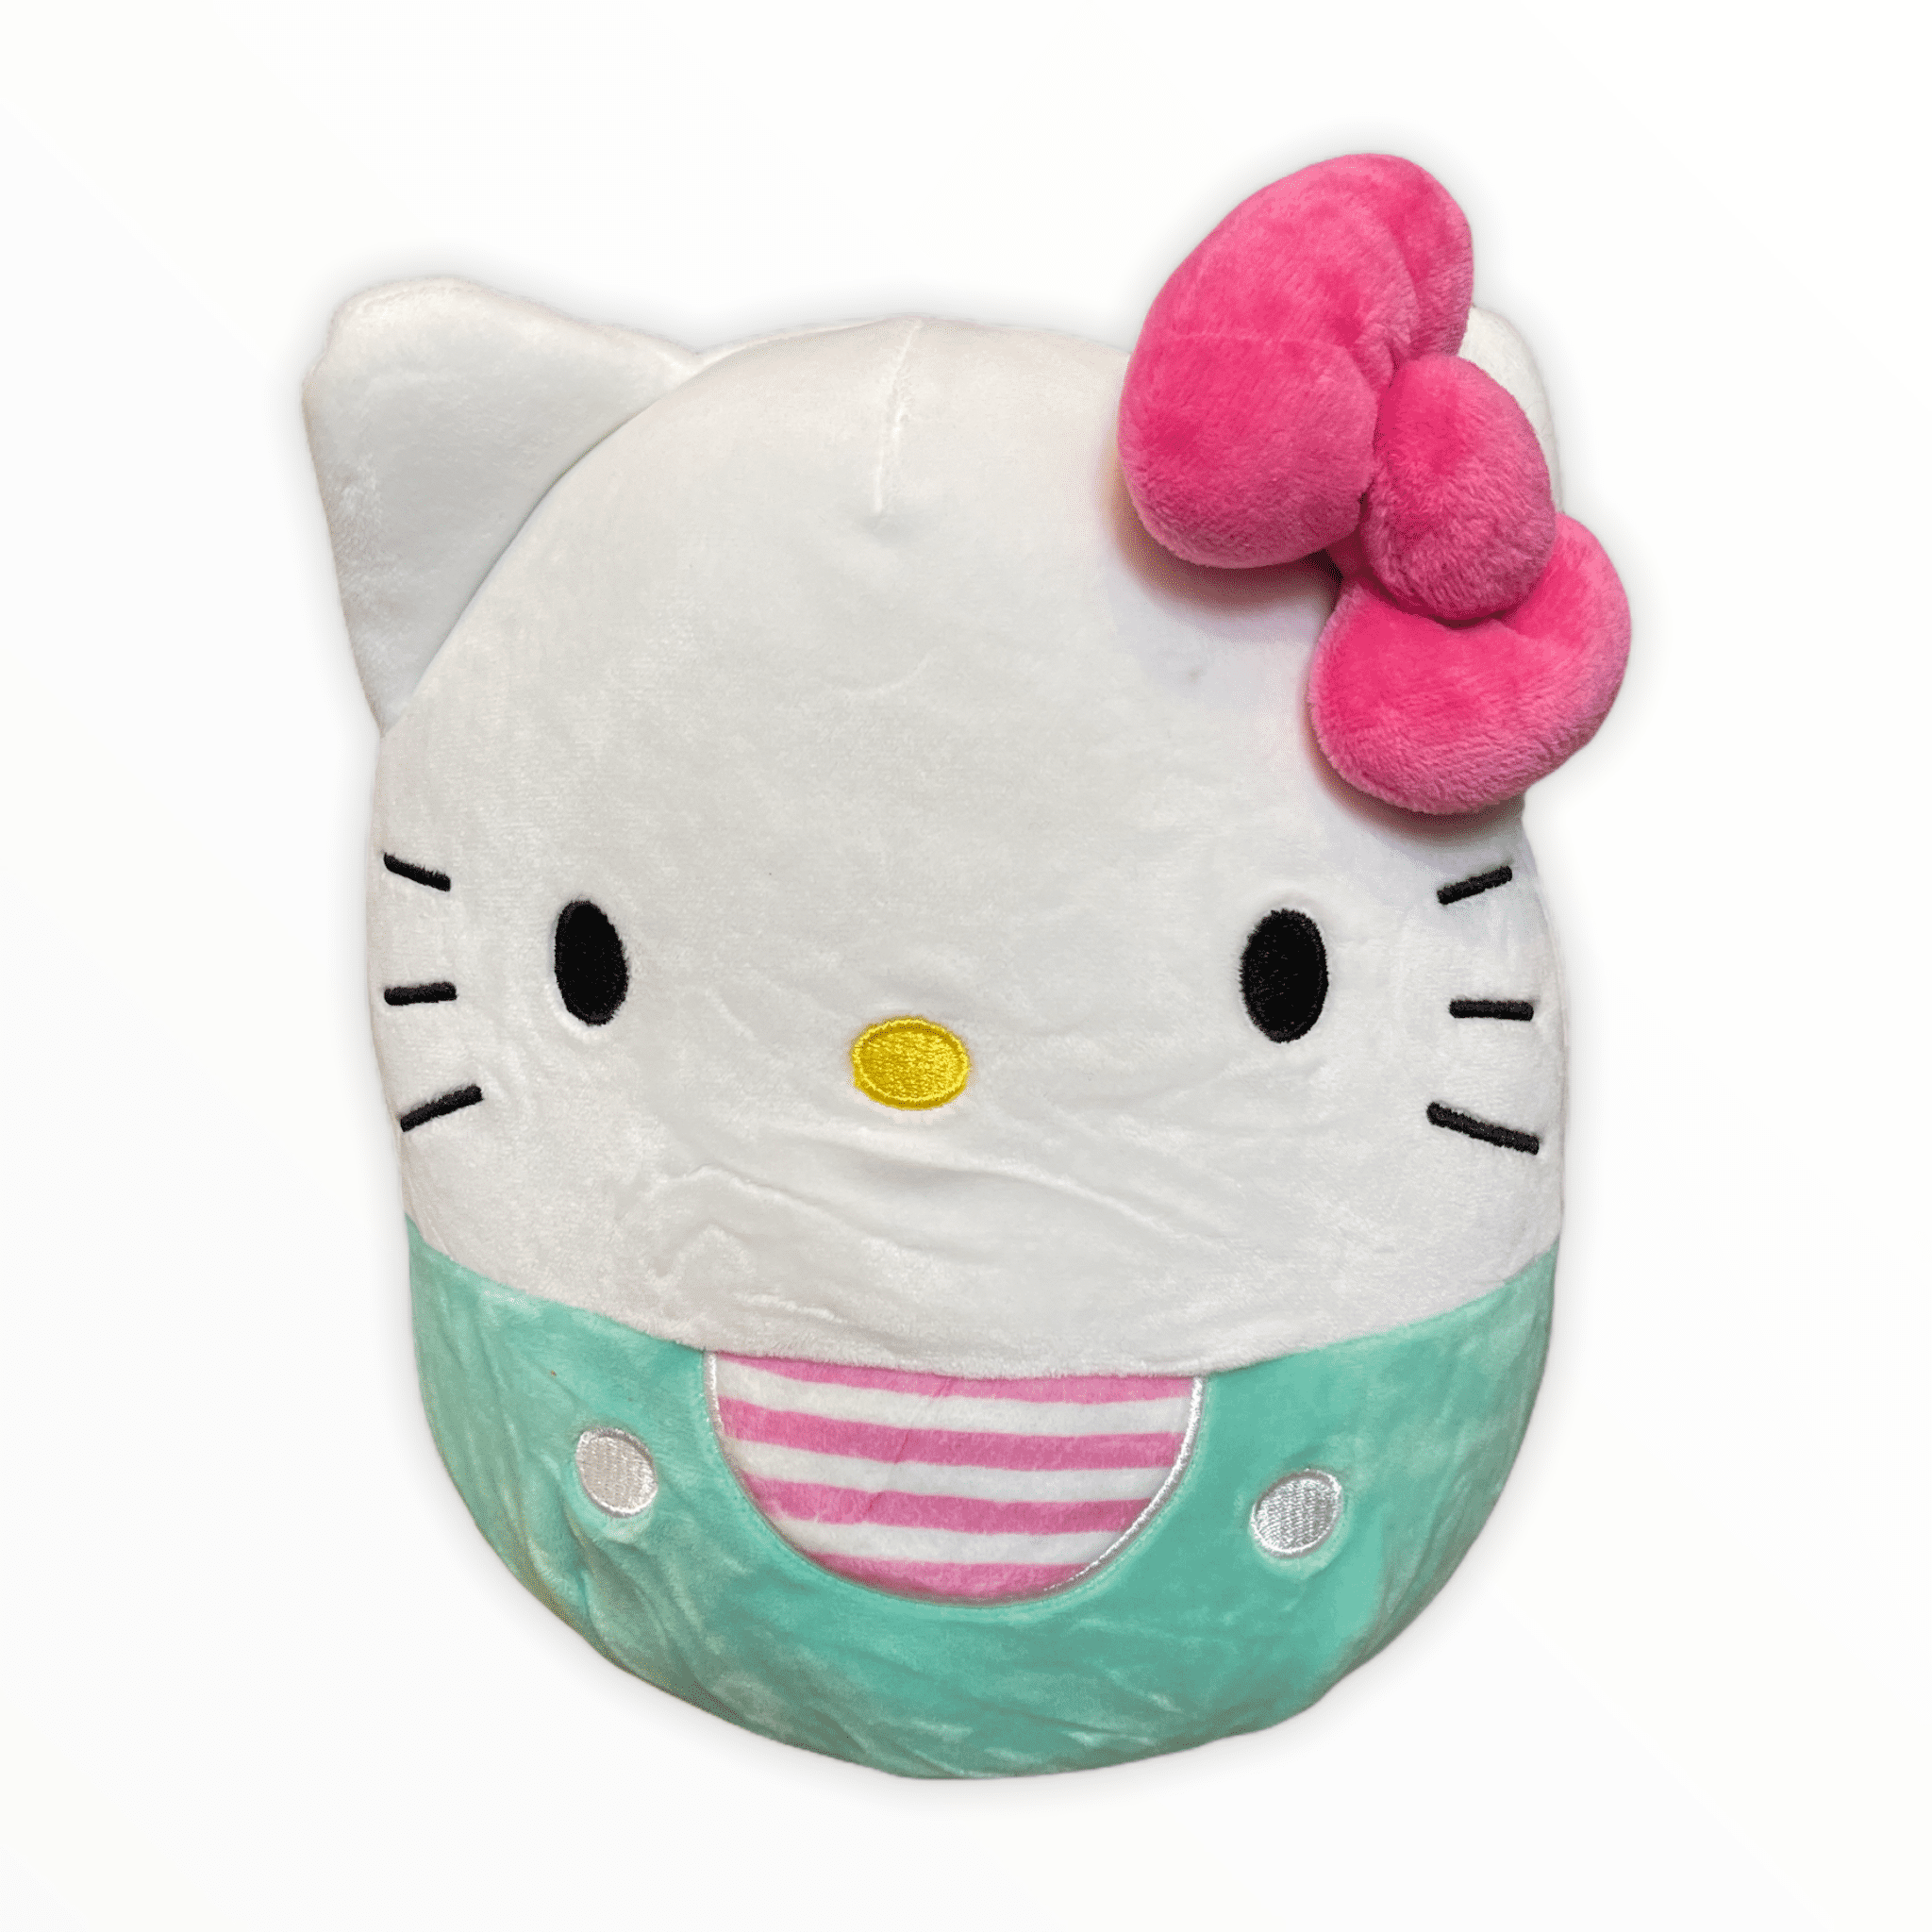 JAPAN SANRIO Hello Kitty Cat Flower Pink Beige Leisure Bag Non-woven Tote Medium 